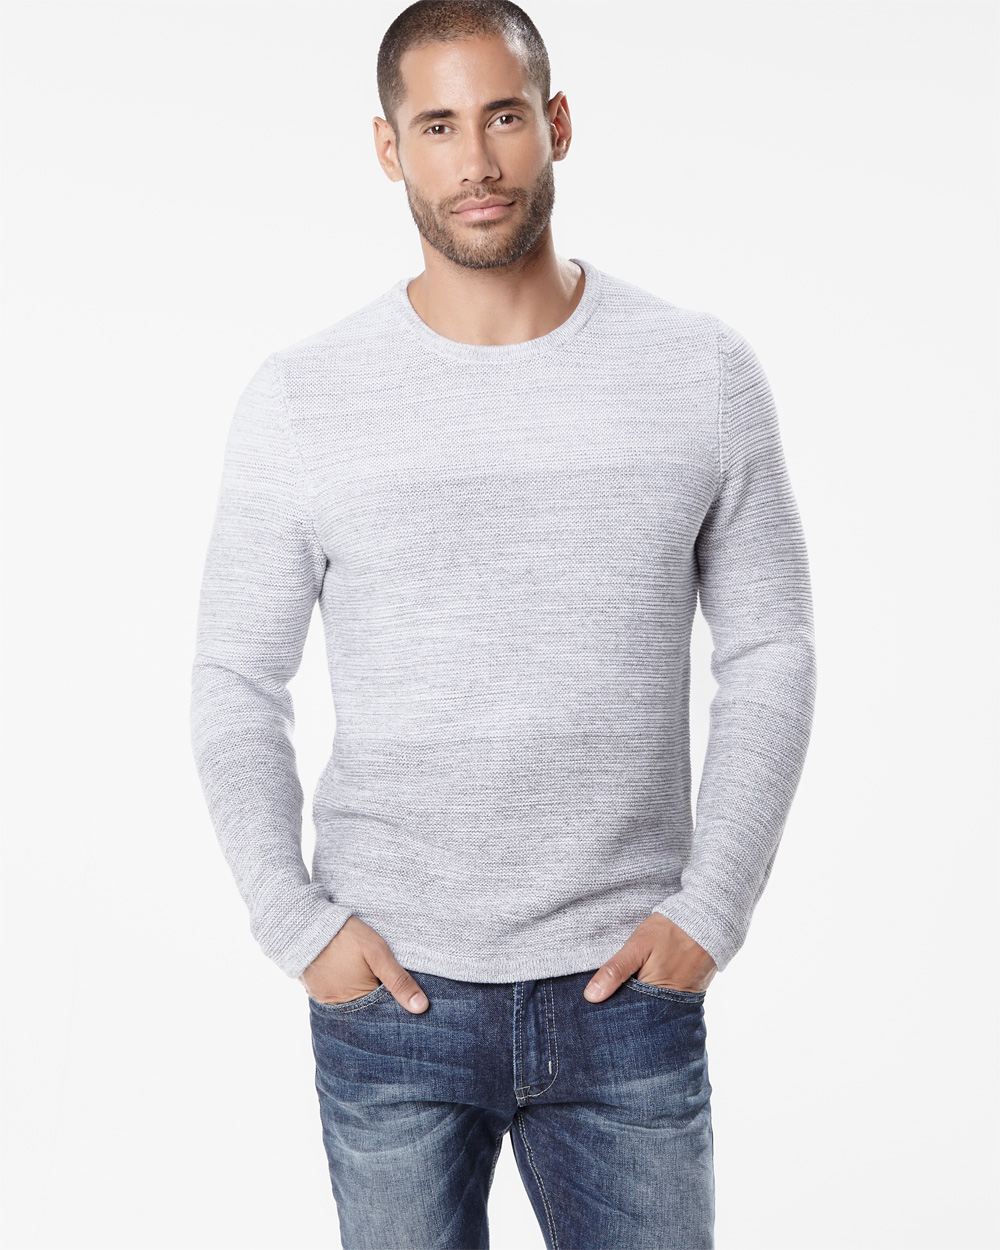 Gradient textured sweater | RW&CO.